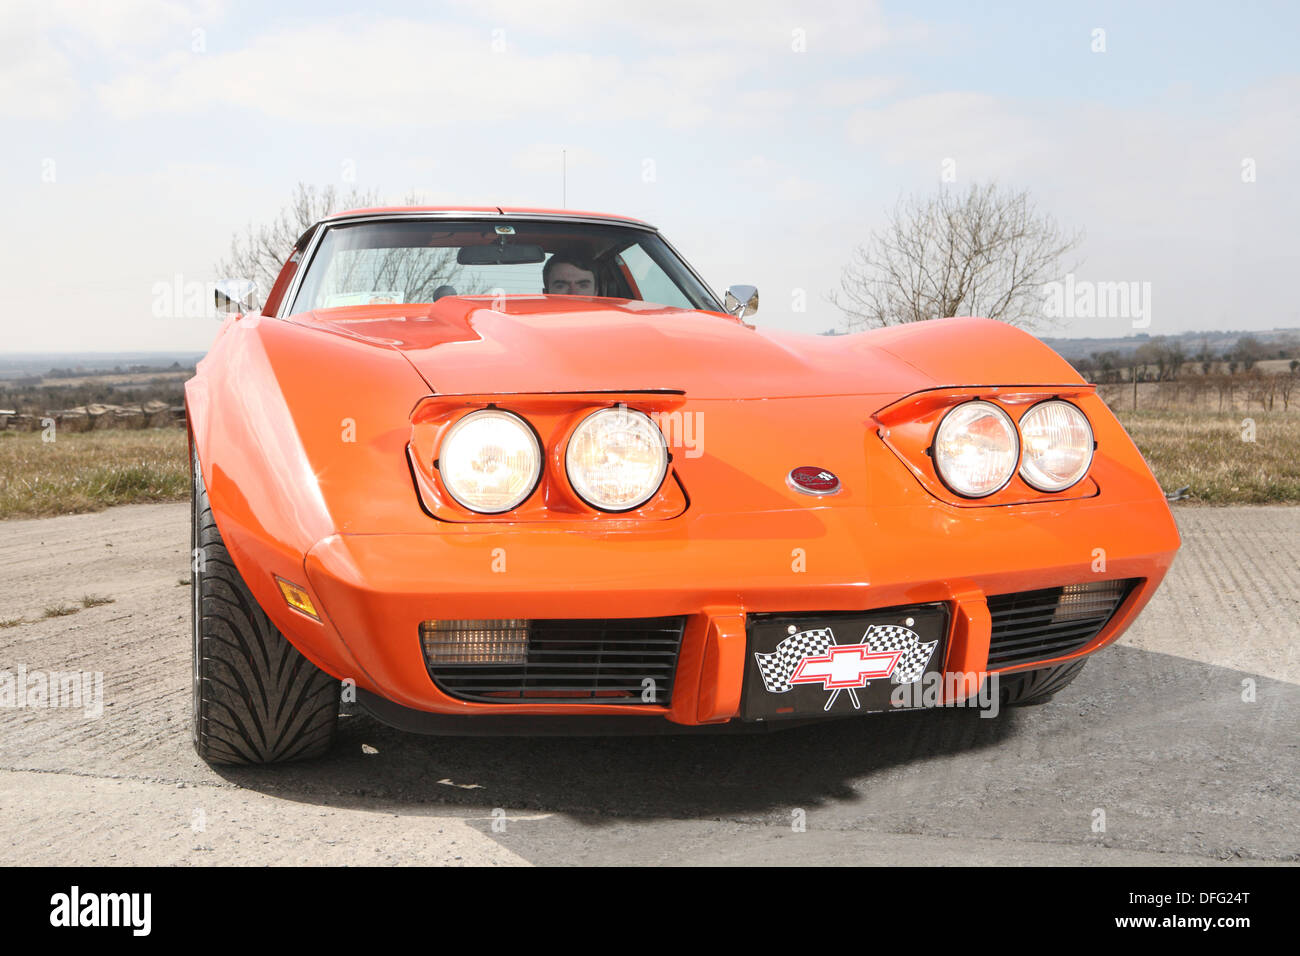 Corvette coupe sports car Stock Photo